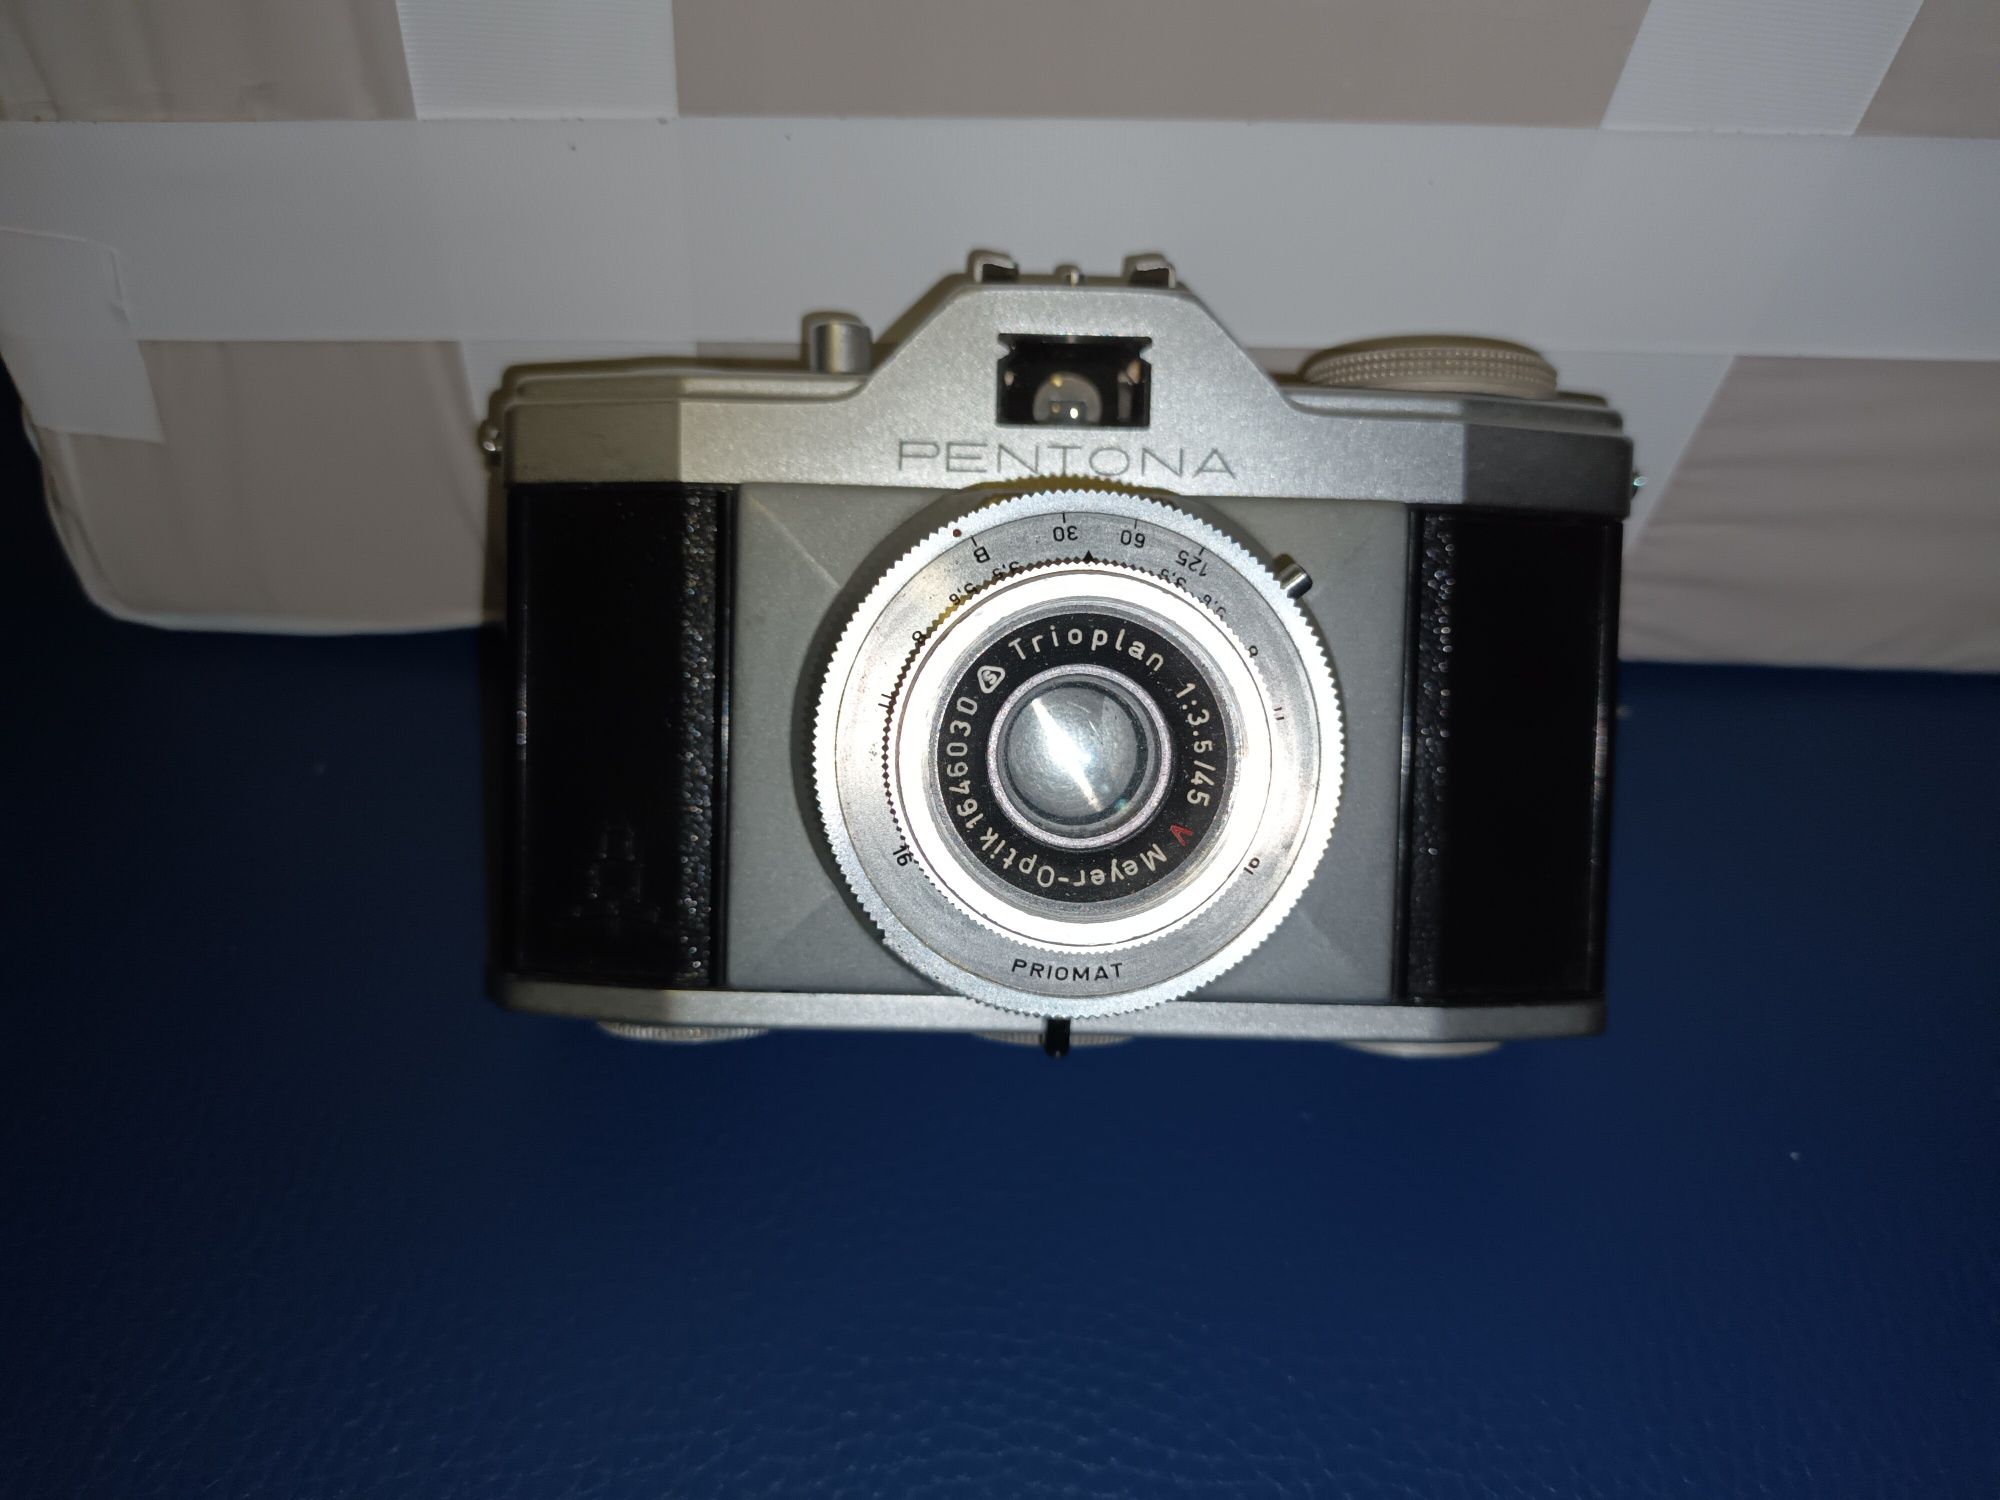 Pentona stary kolekcjonerski aparat fotograficzny